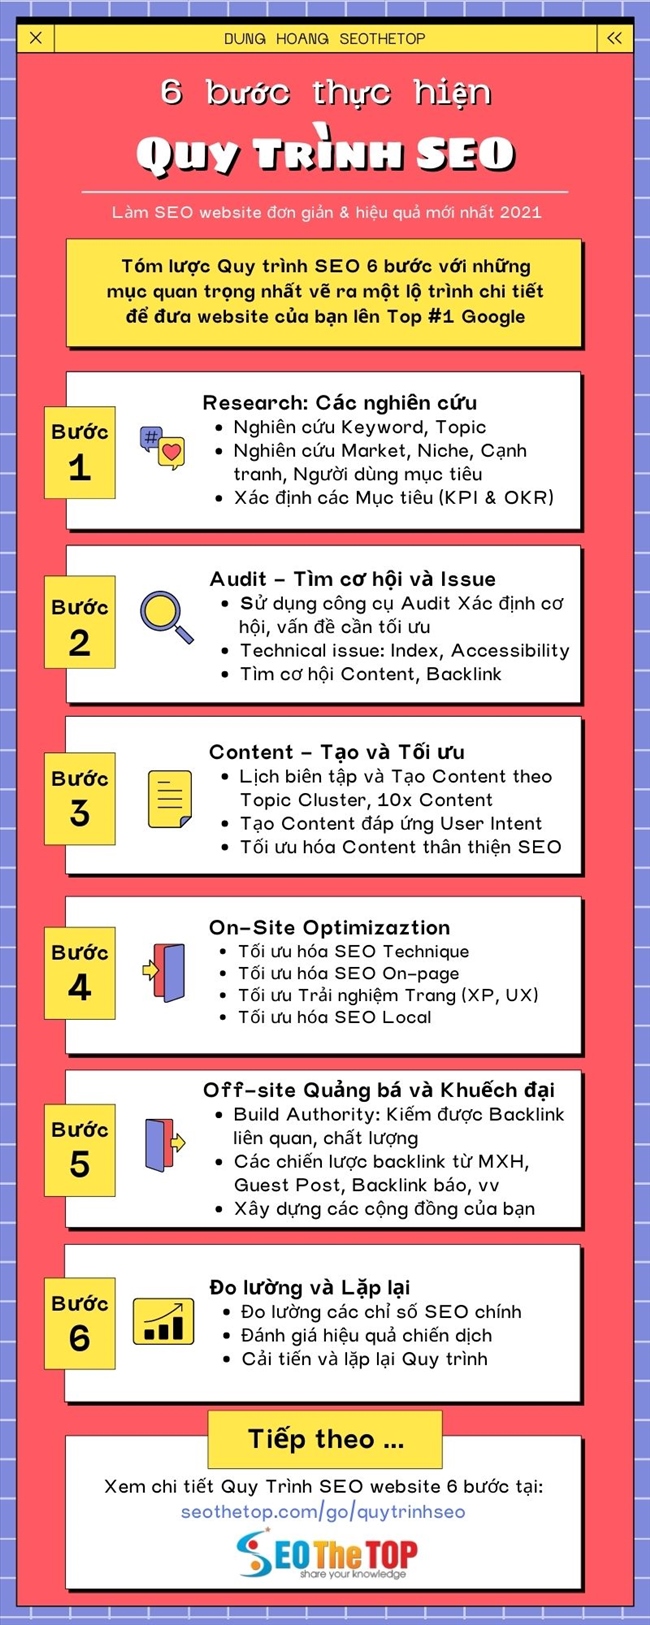 Infographic Quy trình SEO by Dung Hoang Seothetop